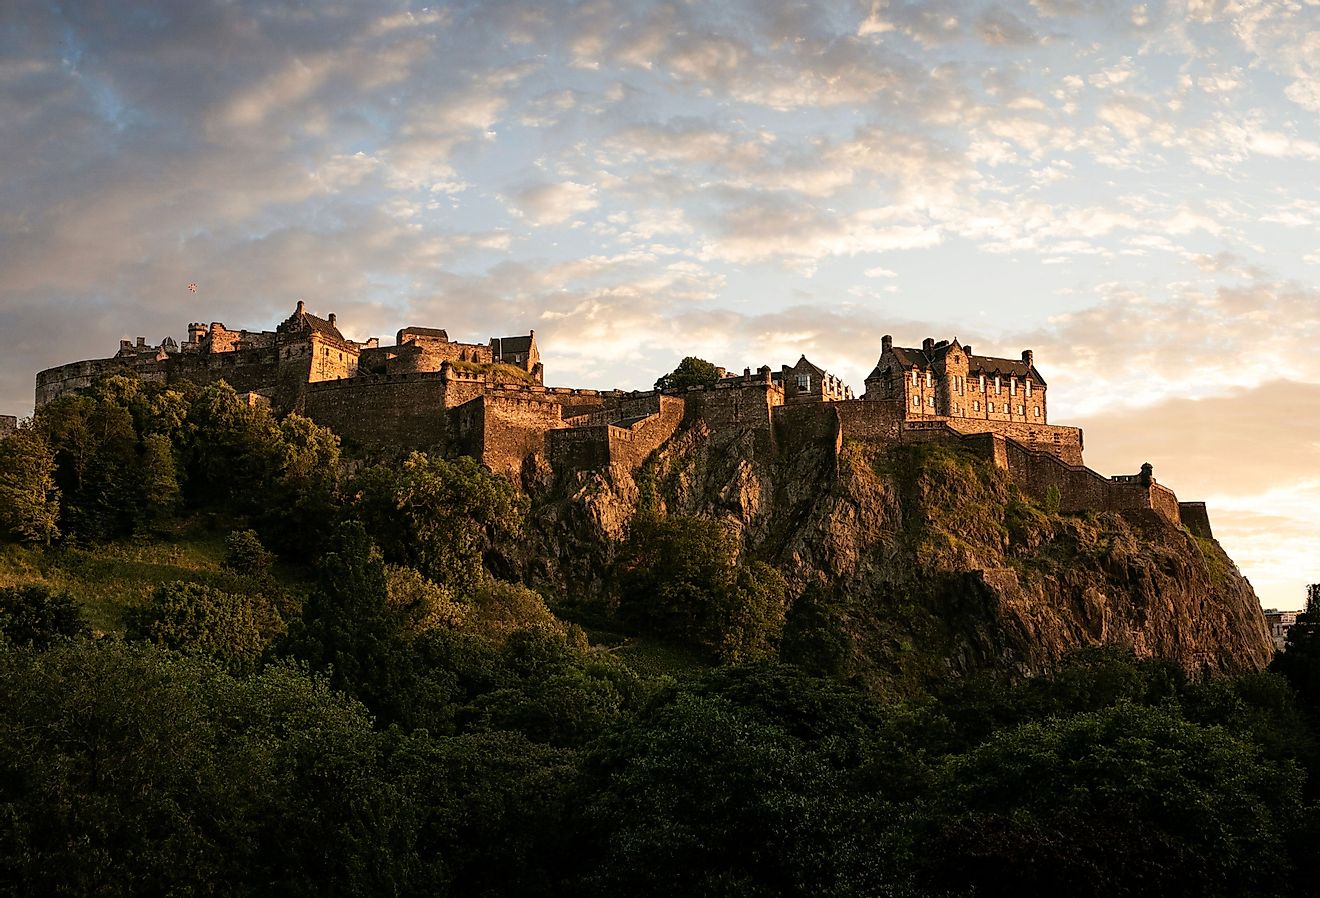 Edinburgh Castle during sunset. Image credit DW art via shutterstock